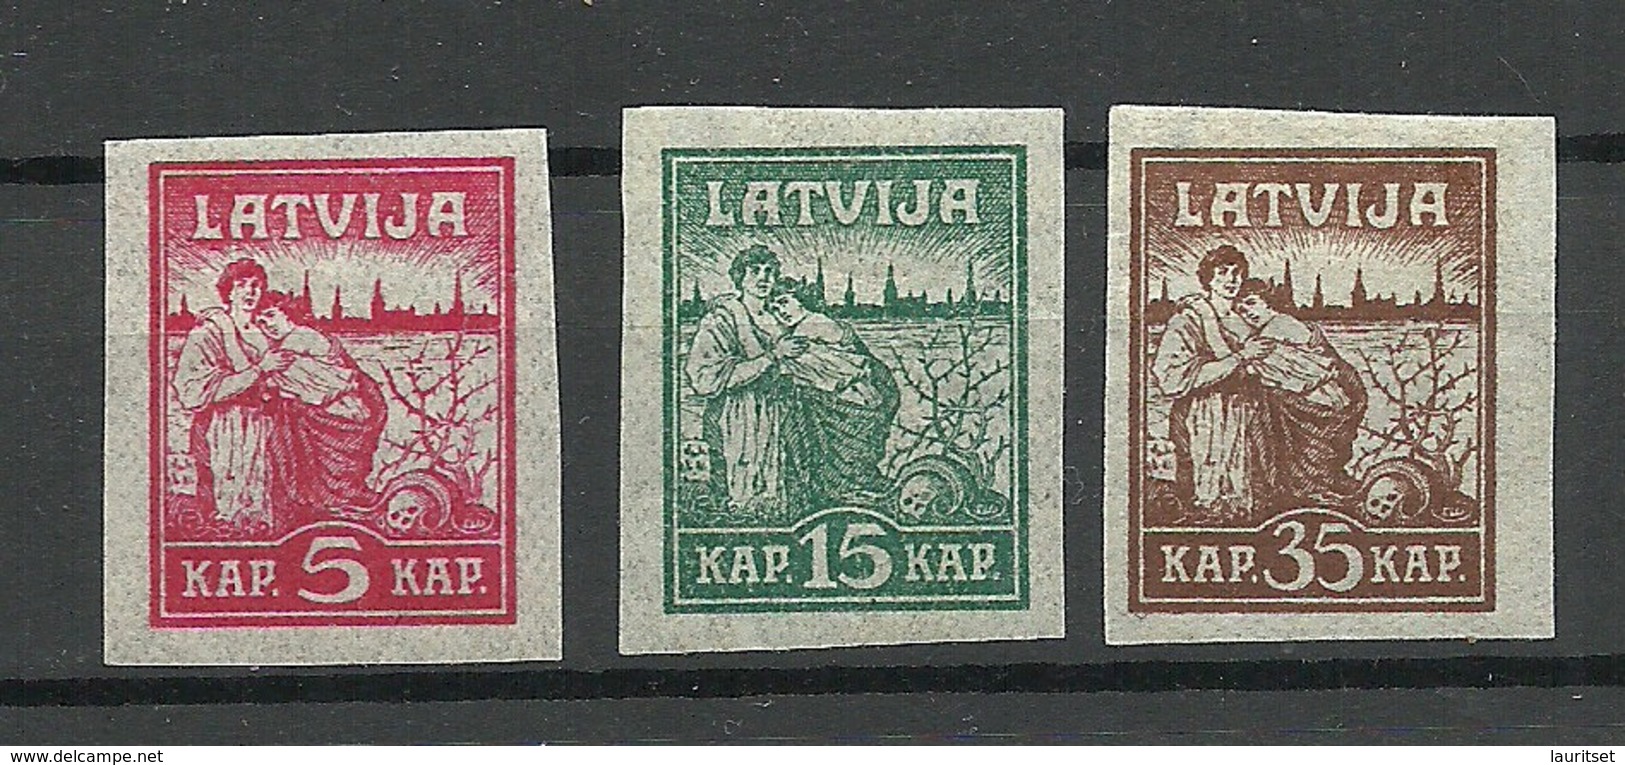 LETTLAND Latvia 1919 Michel 25 - 27 Y (Zigarettenpapier) MNH/MH - Latvia